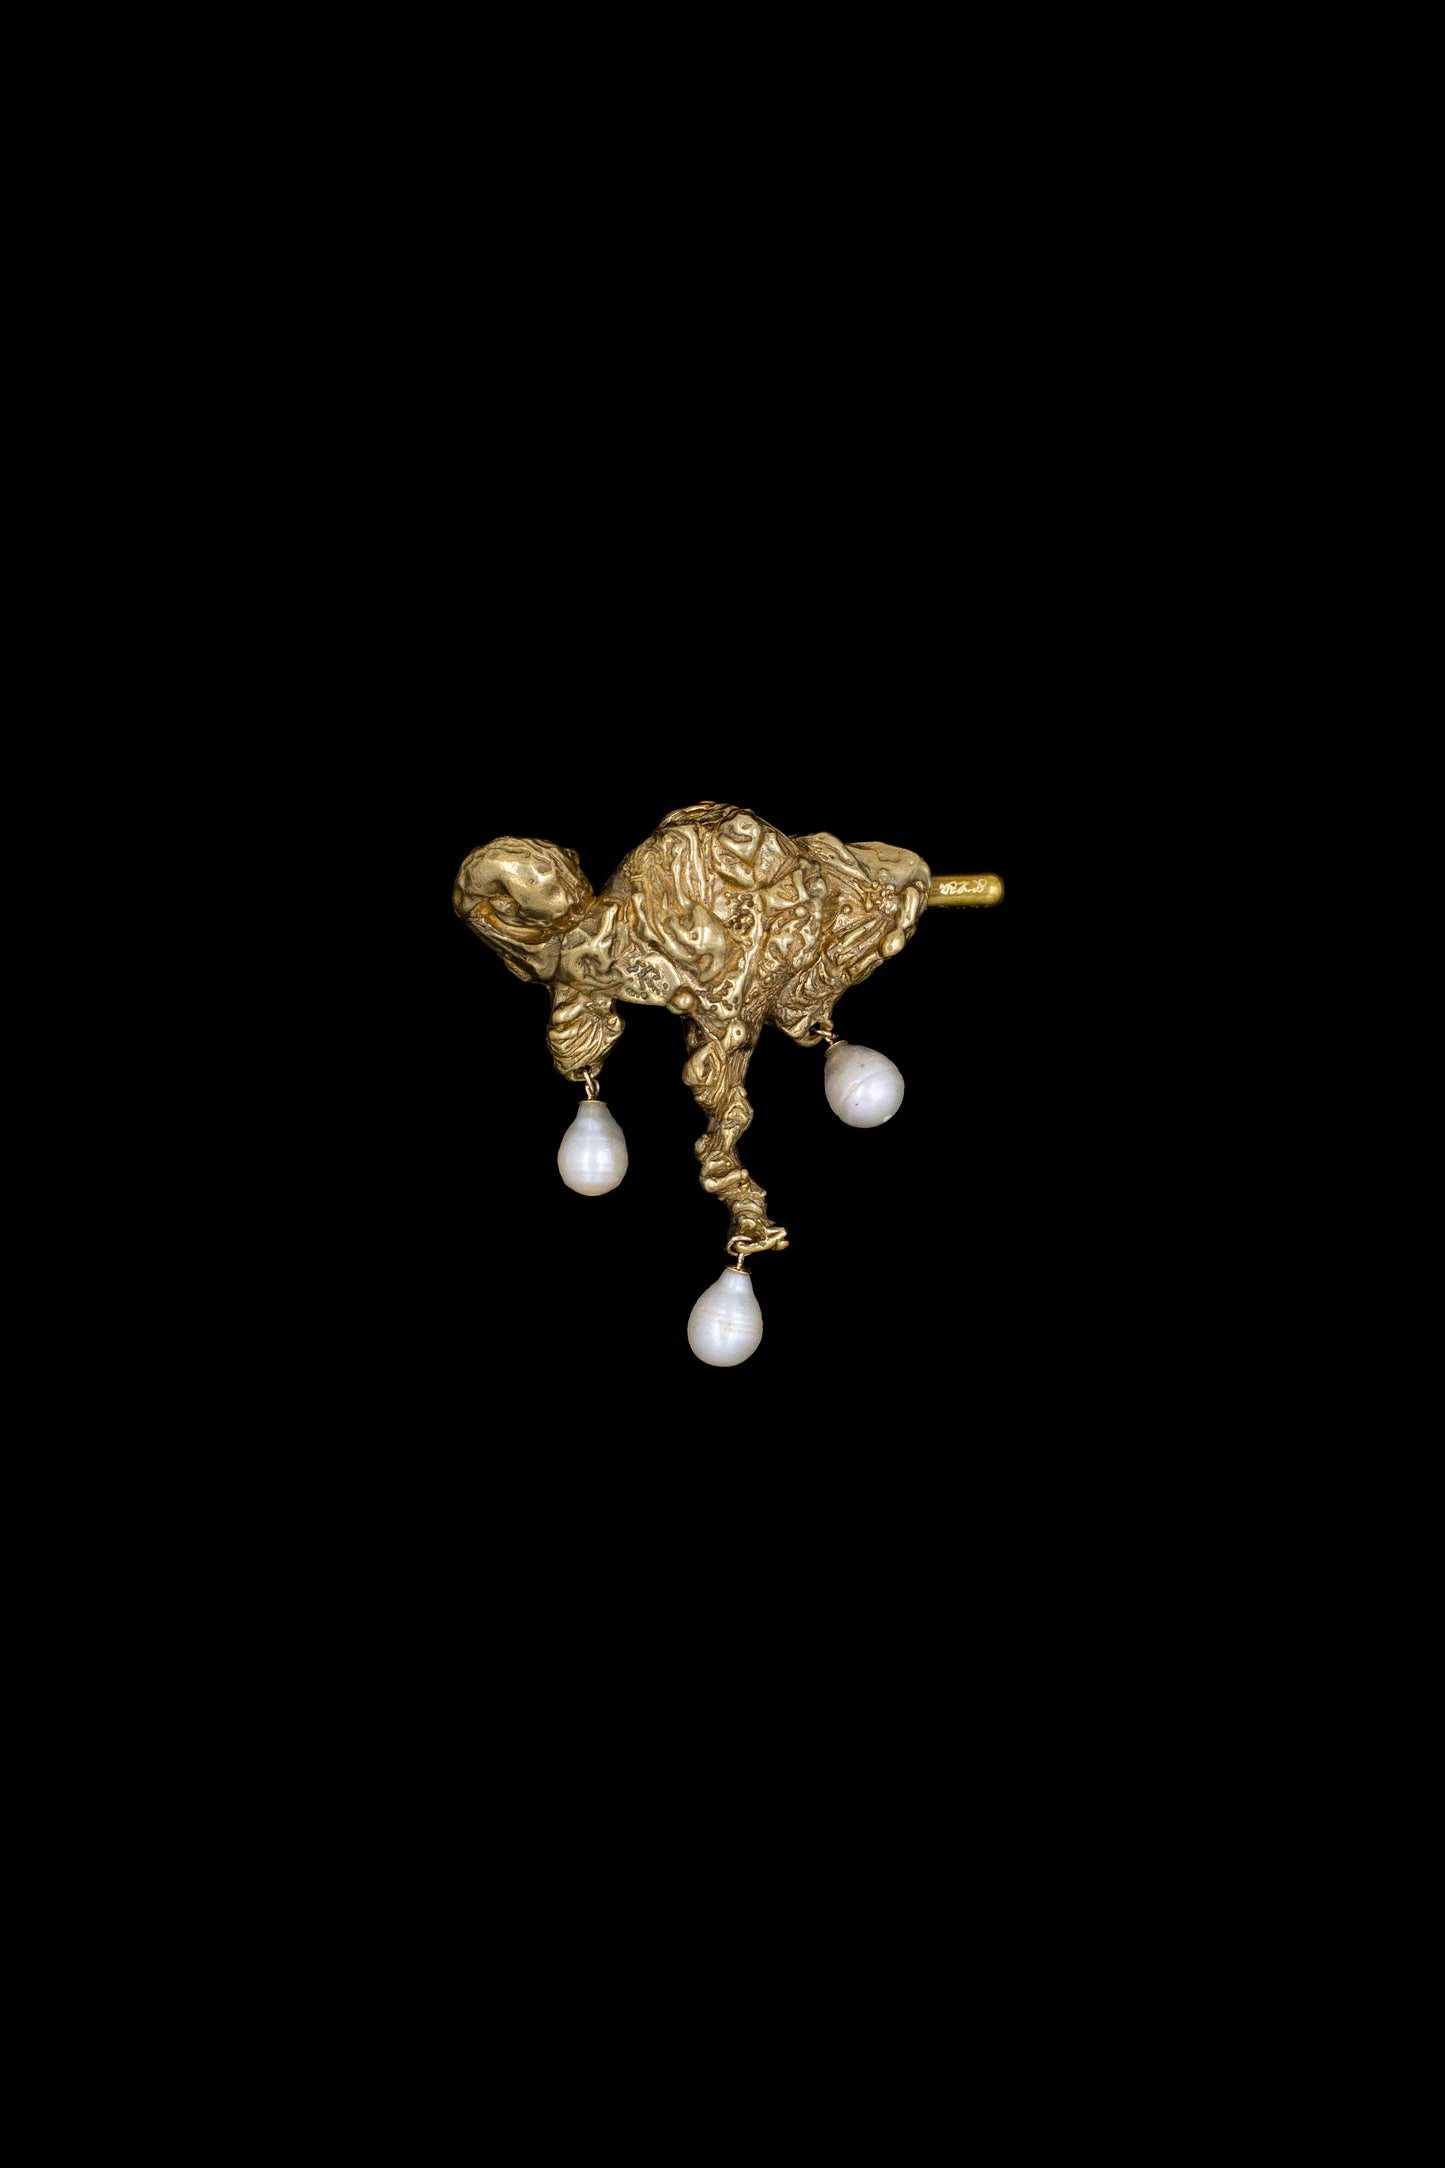 Curdled Brooch no. 1 (3 pearls)